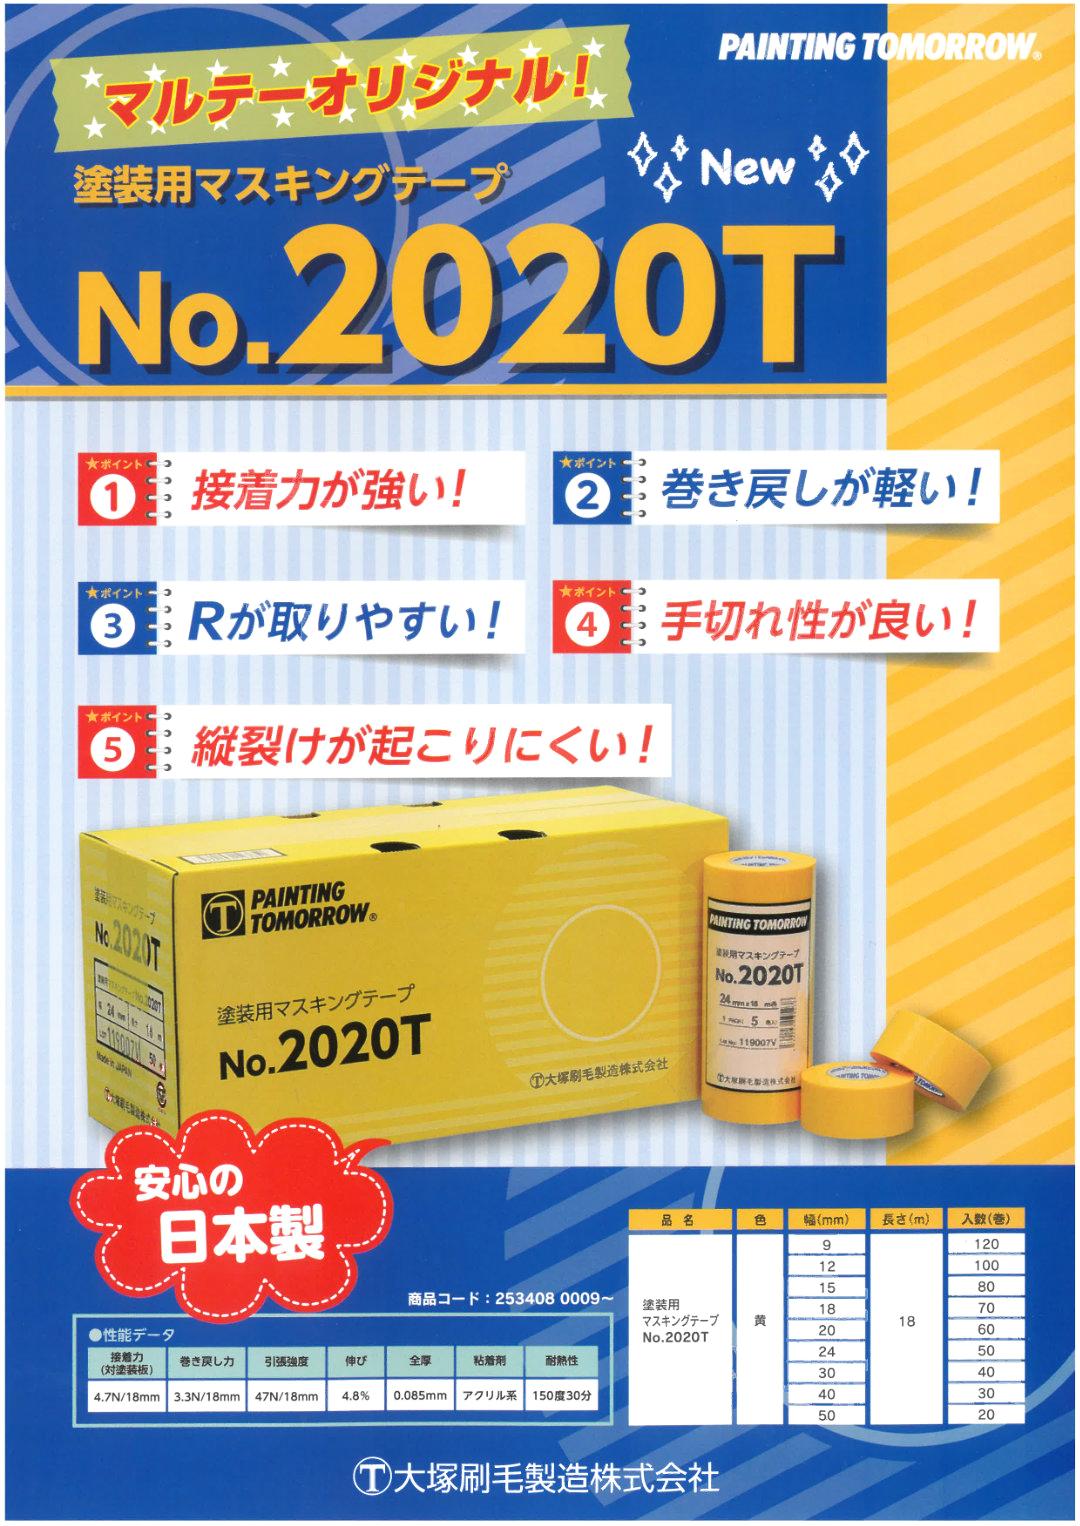 No.2020T 塗装用マスキングテープ 黄 15mm | akiba paint web 本店